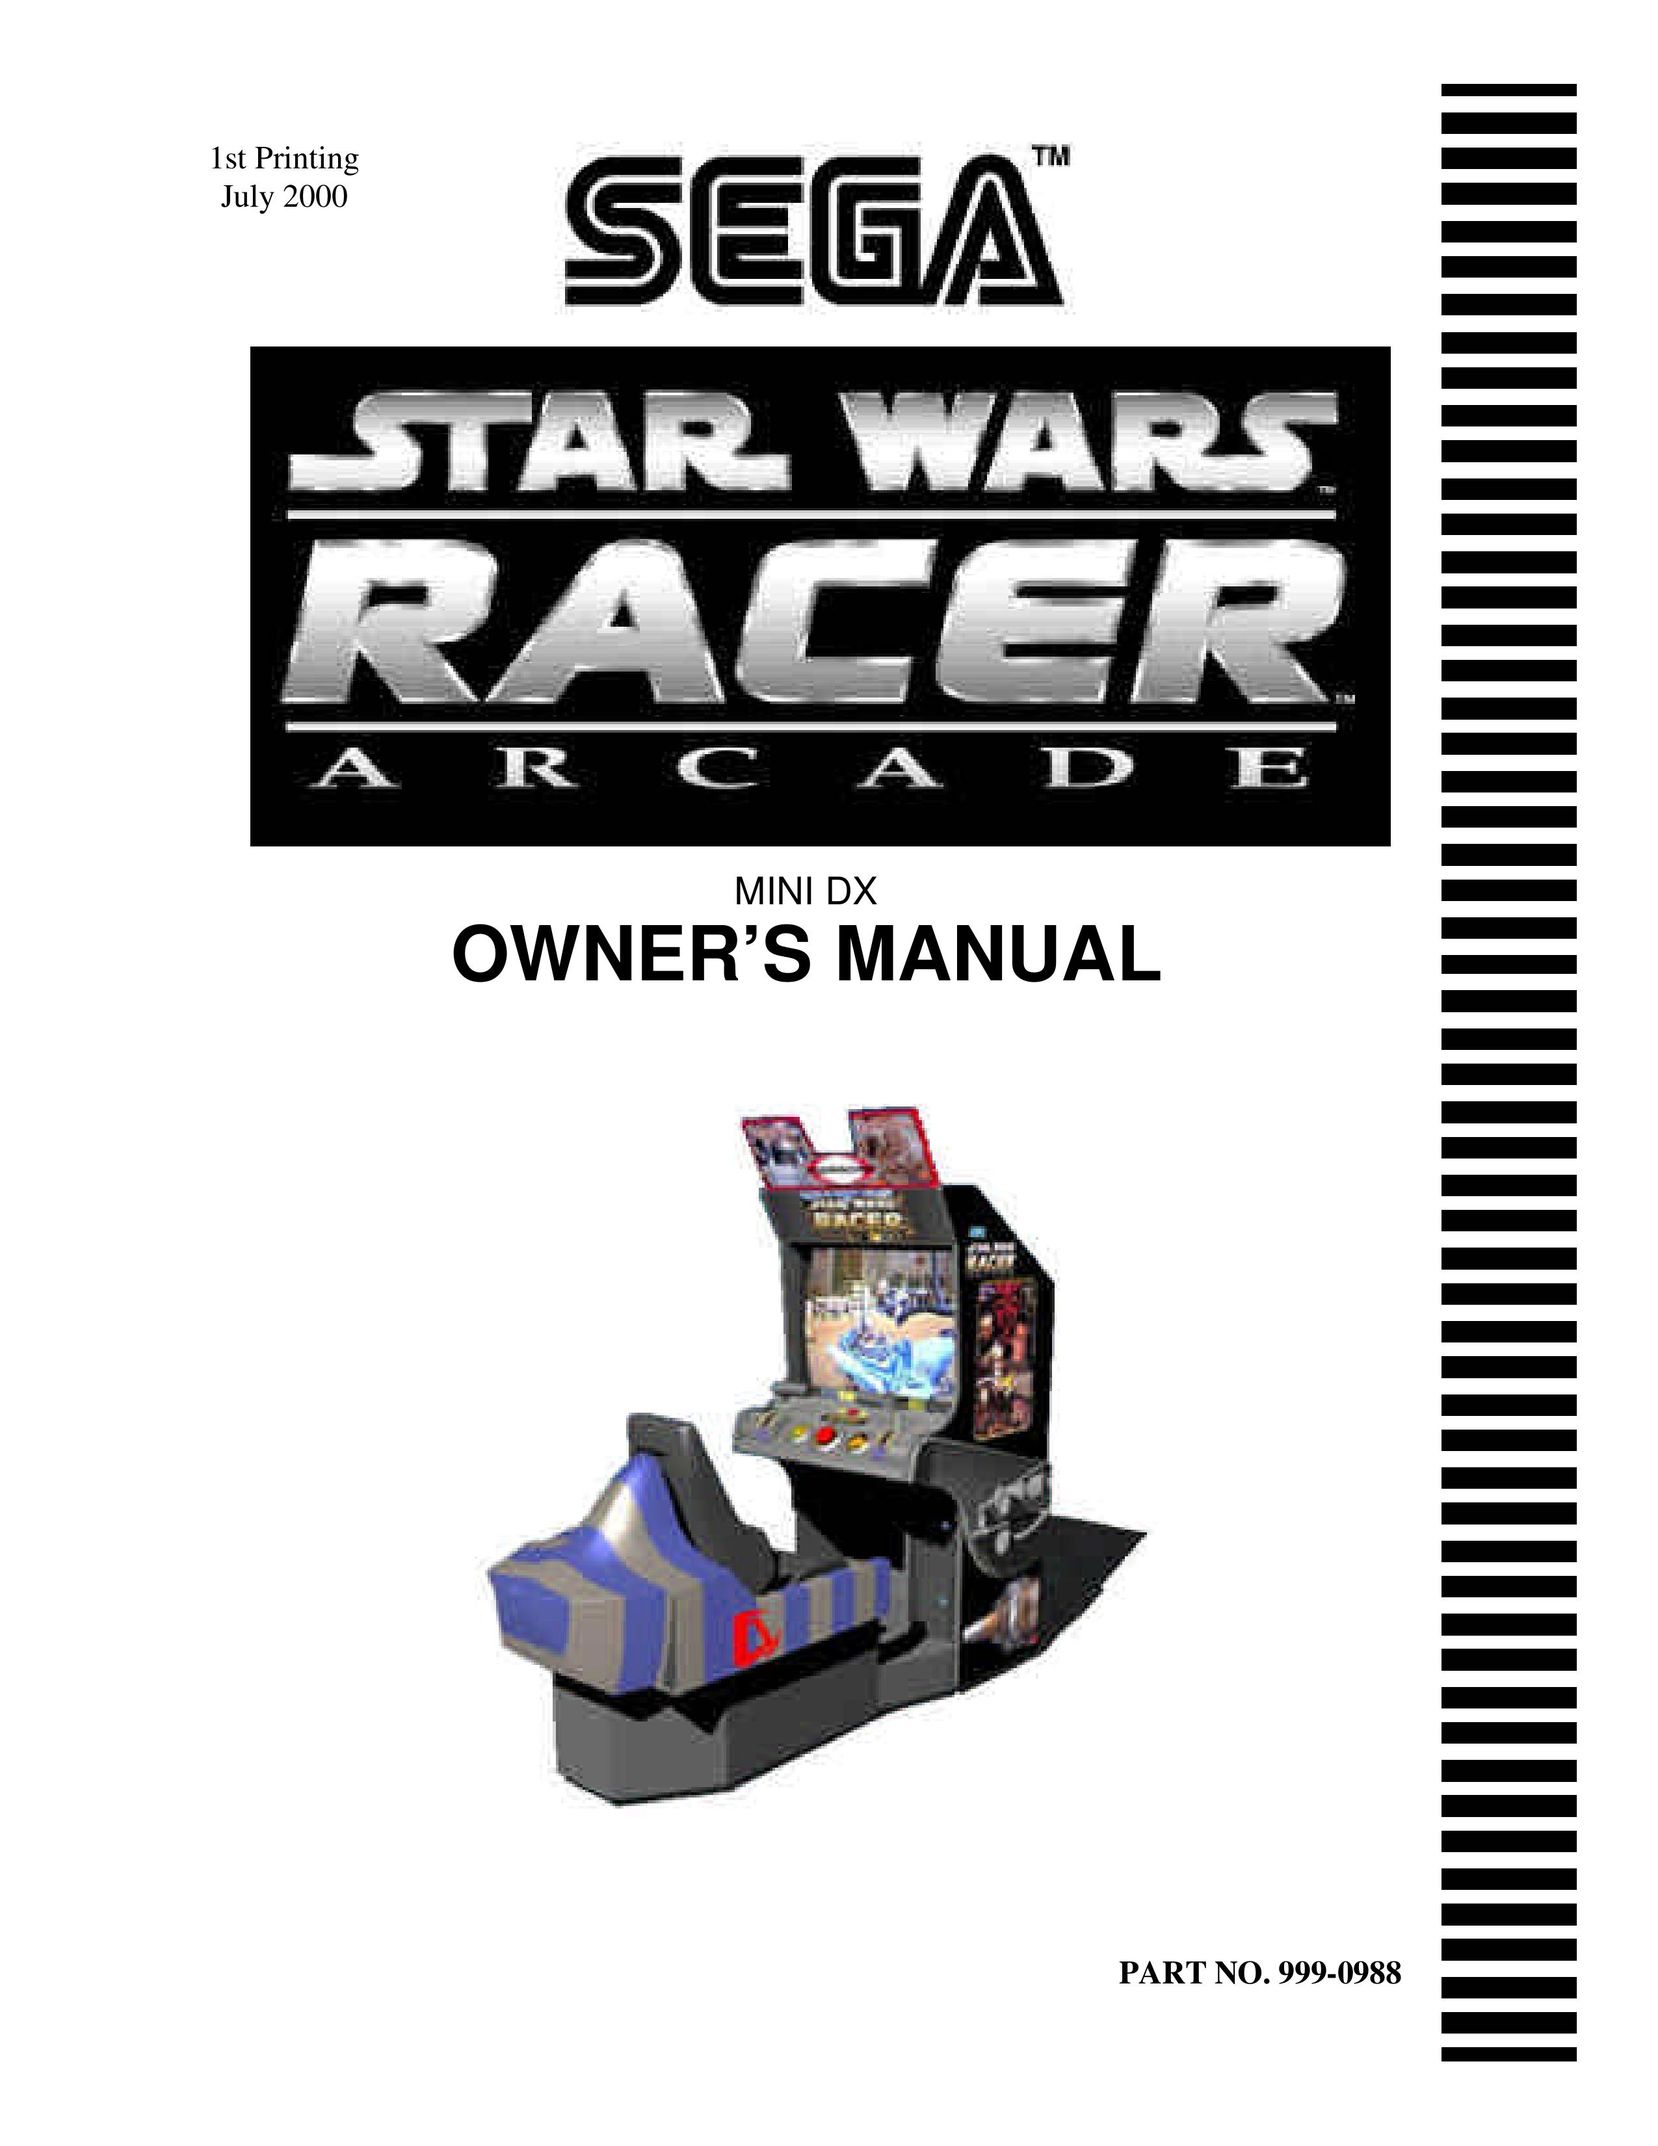 Sega Star Wars Racer Arcade Barcode Reader User Manual